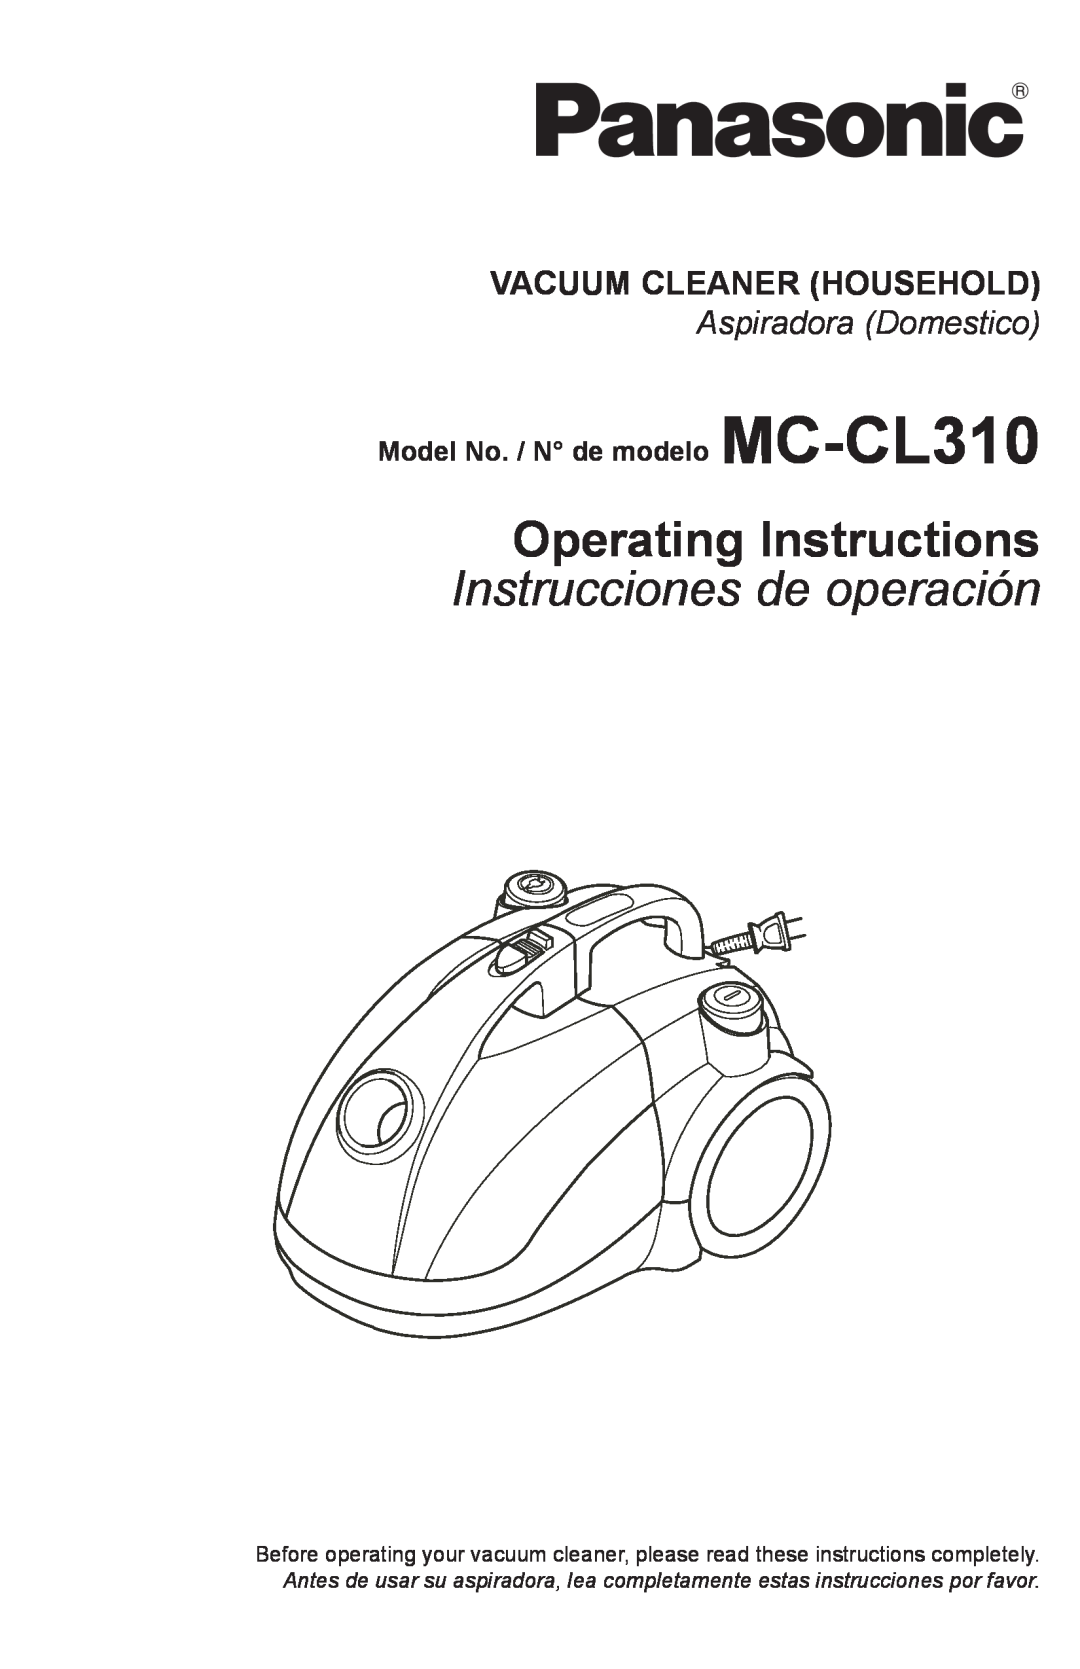 Panasonic MC-CL310 manual Operating Instructions, Instrucciones de operación, Vacuum Cleaner Household 